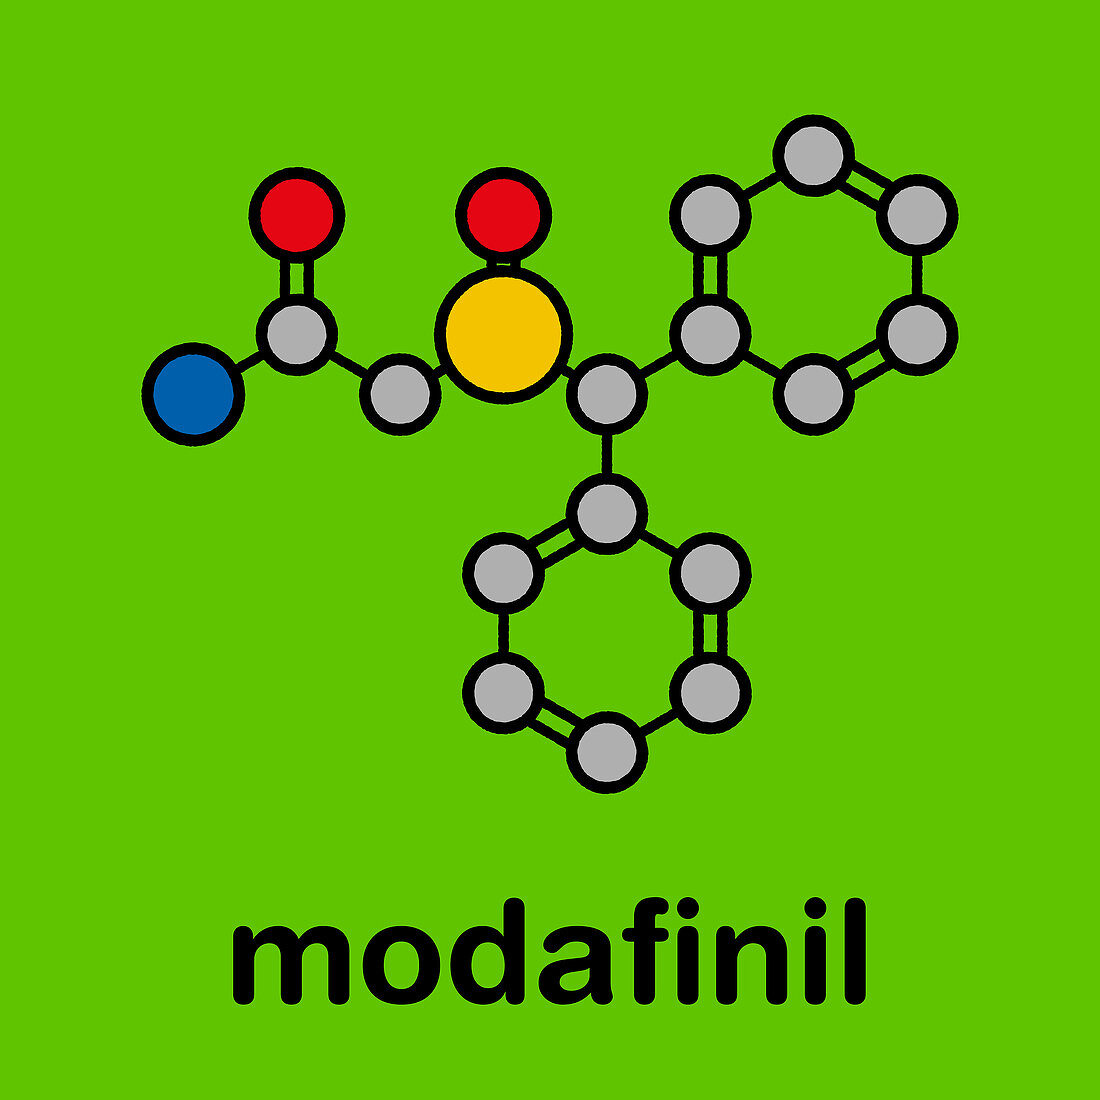 Modafinil wakefulness promoting drug molecule, illustration